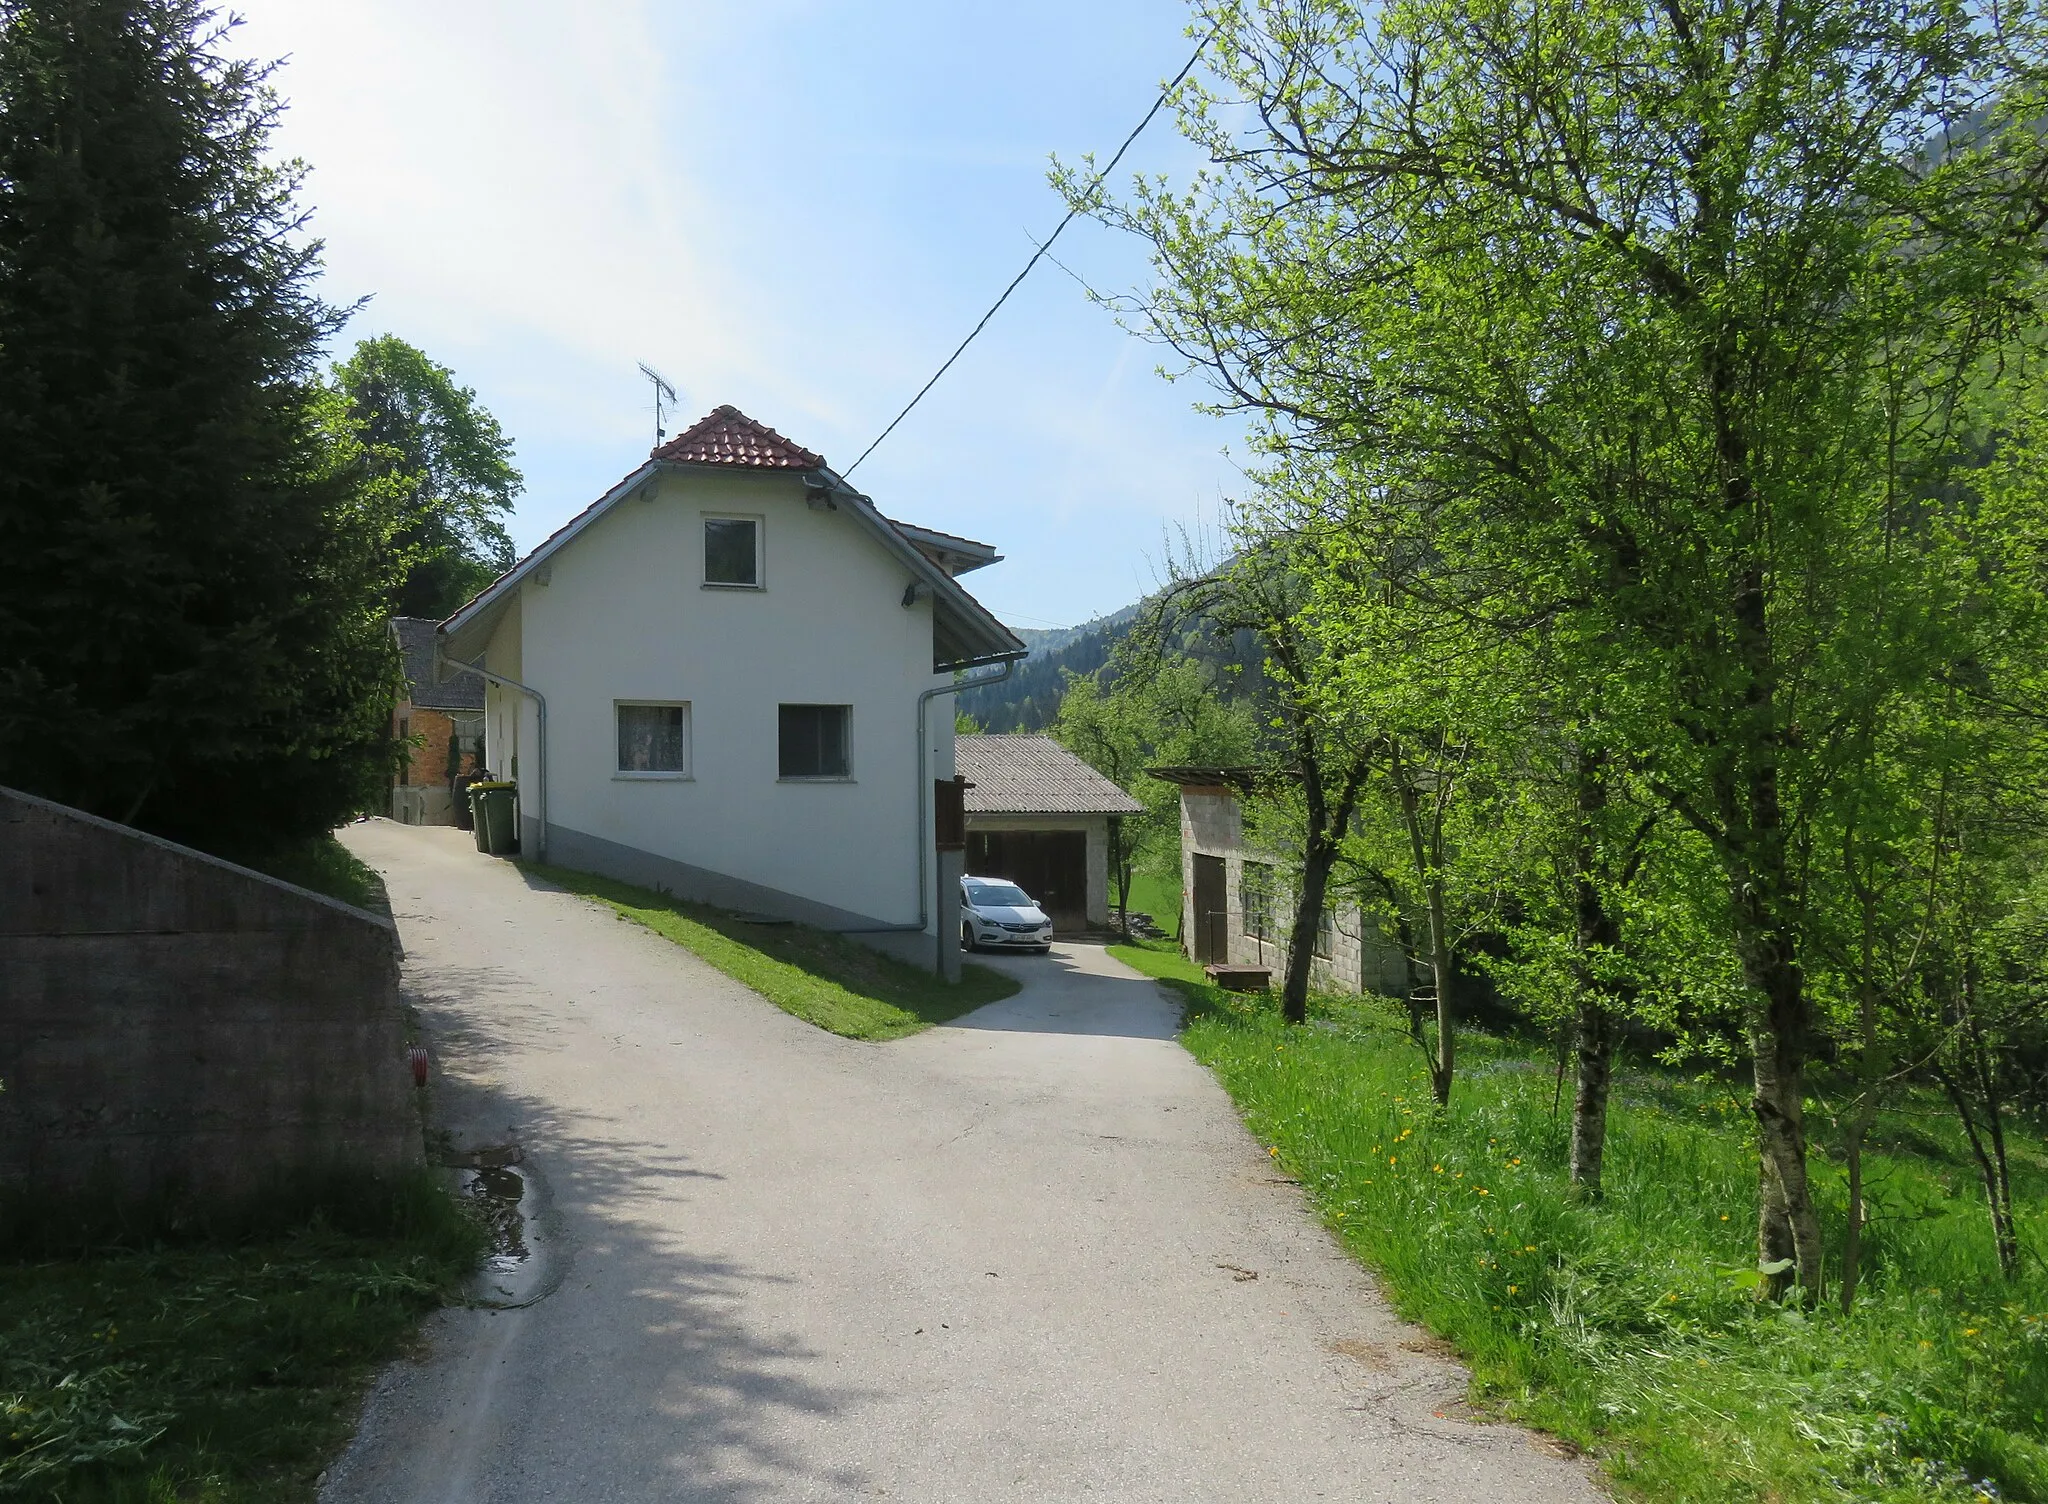 Photo showing: Zadolje, Municipality of Ribnica, Slovenia